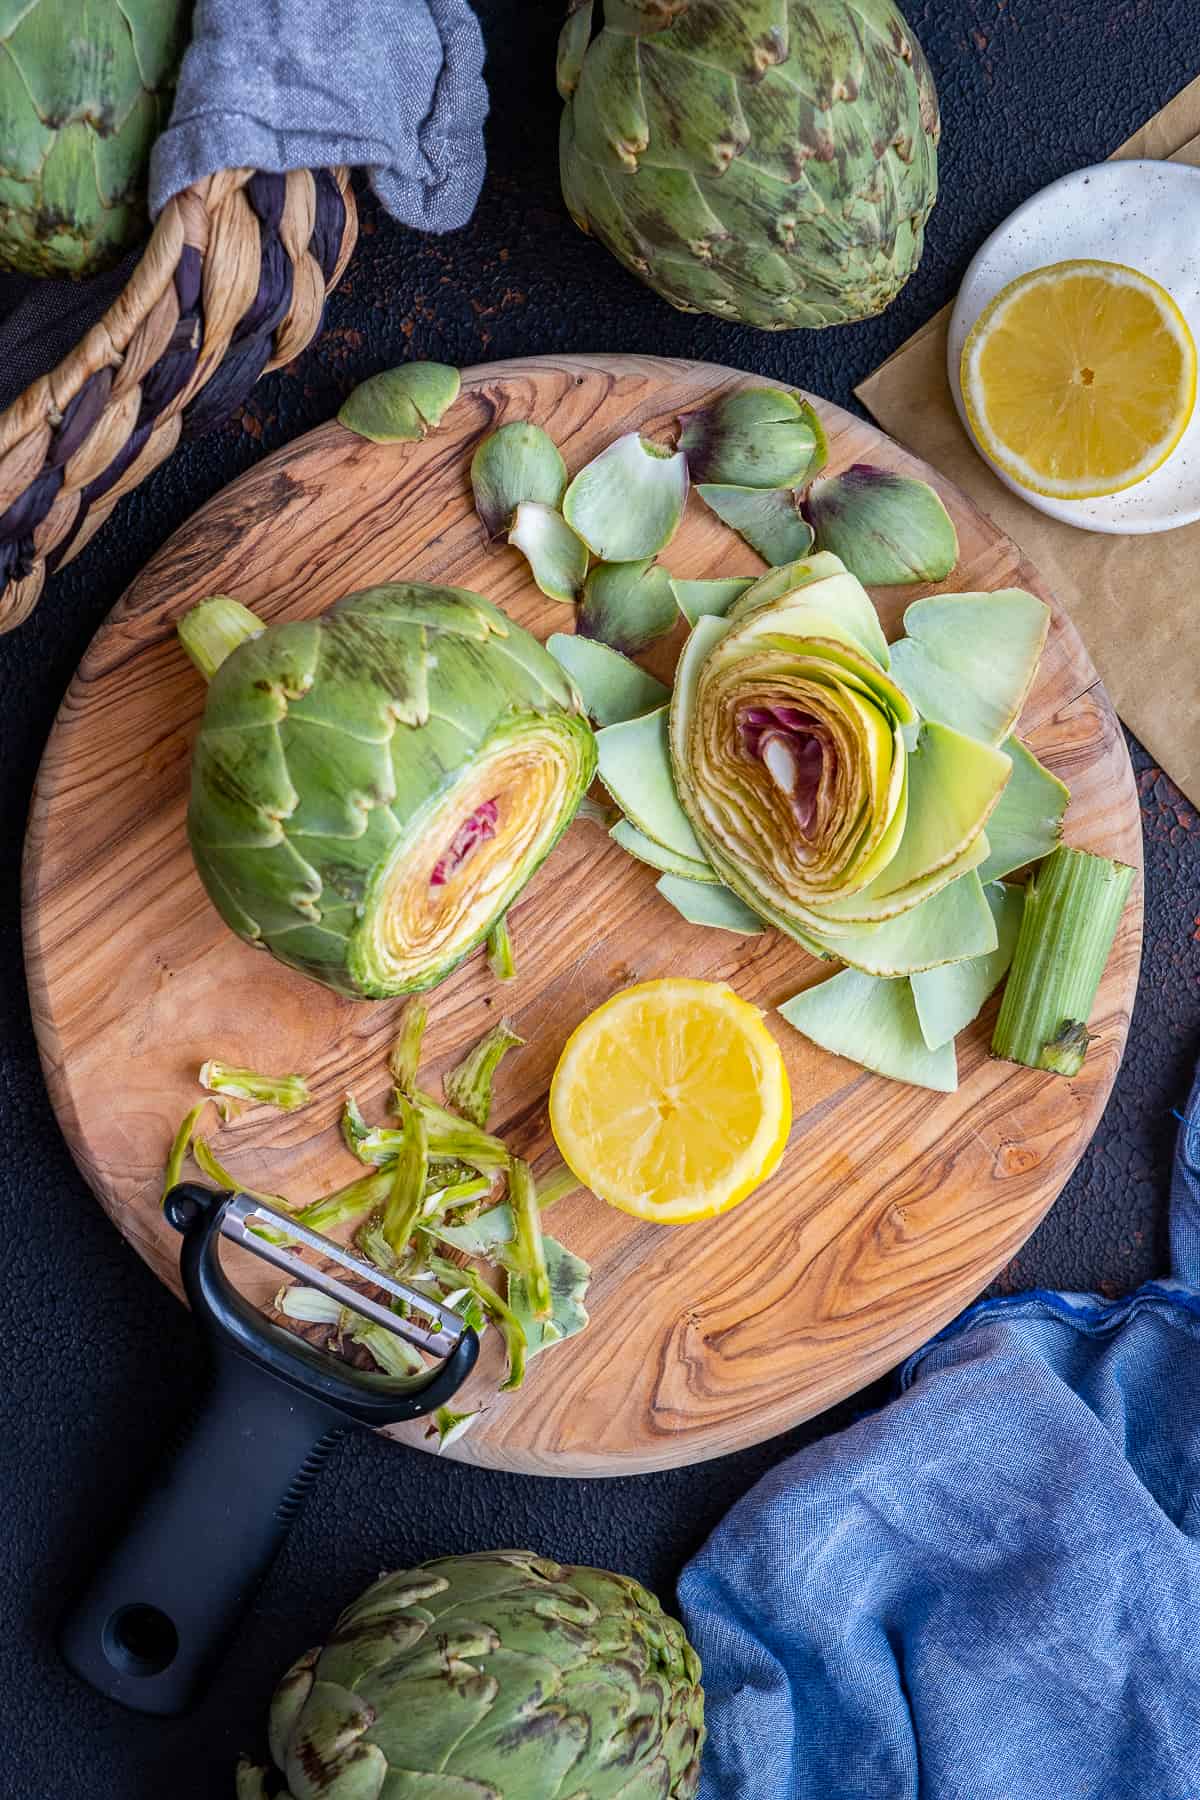 An artichoke trimmed on a wooden board, a slice of lemon and a peeler accompany.